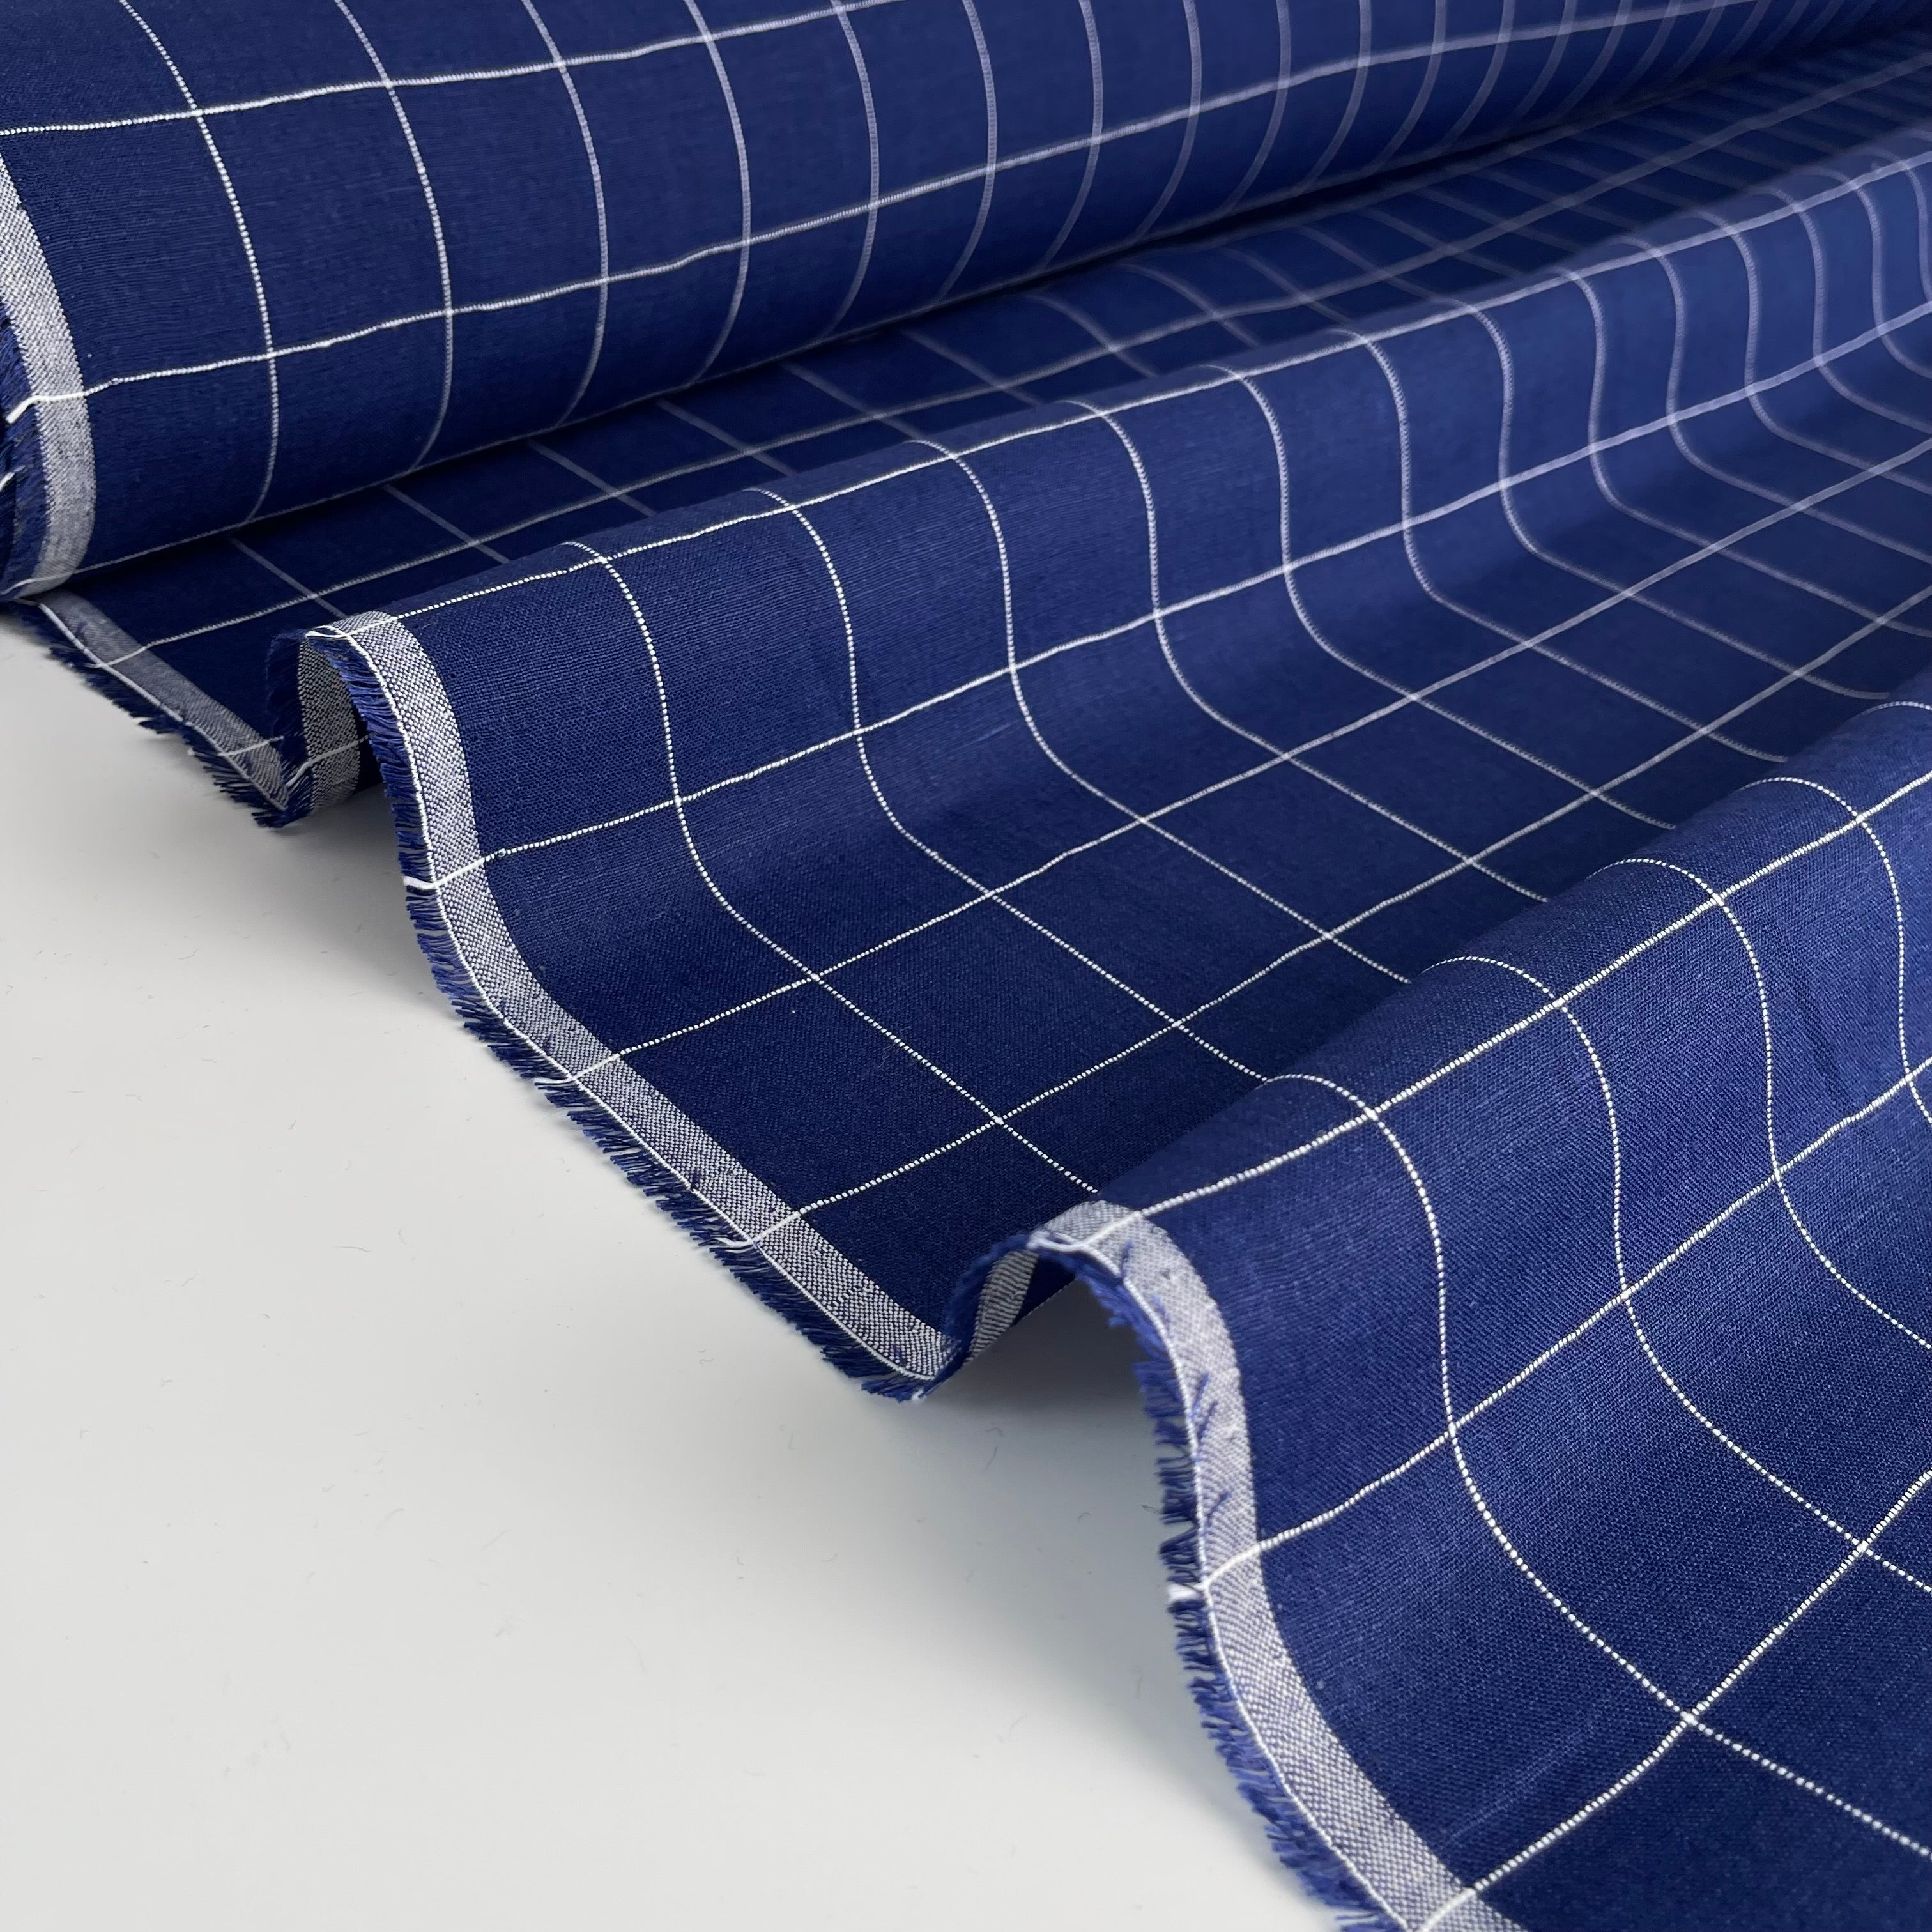 Monochrome Checks Cobalt Blue Linen Fabric